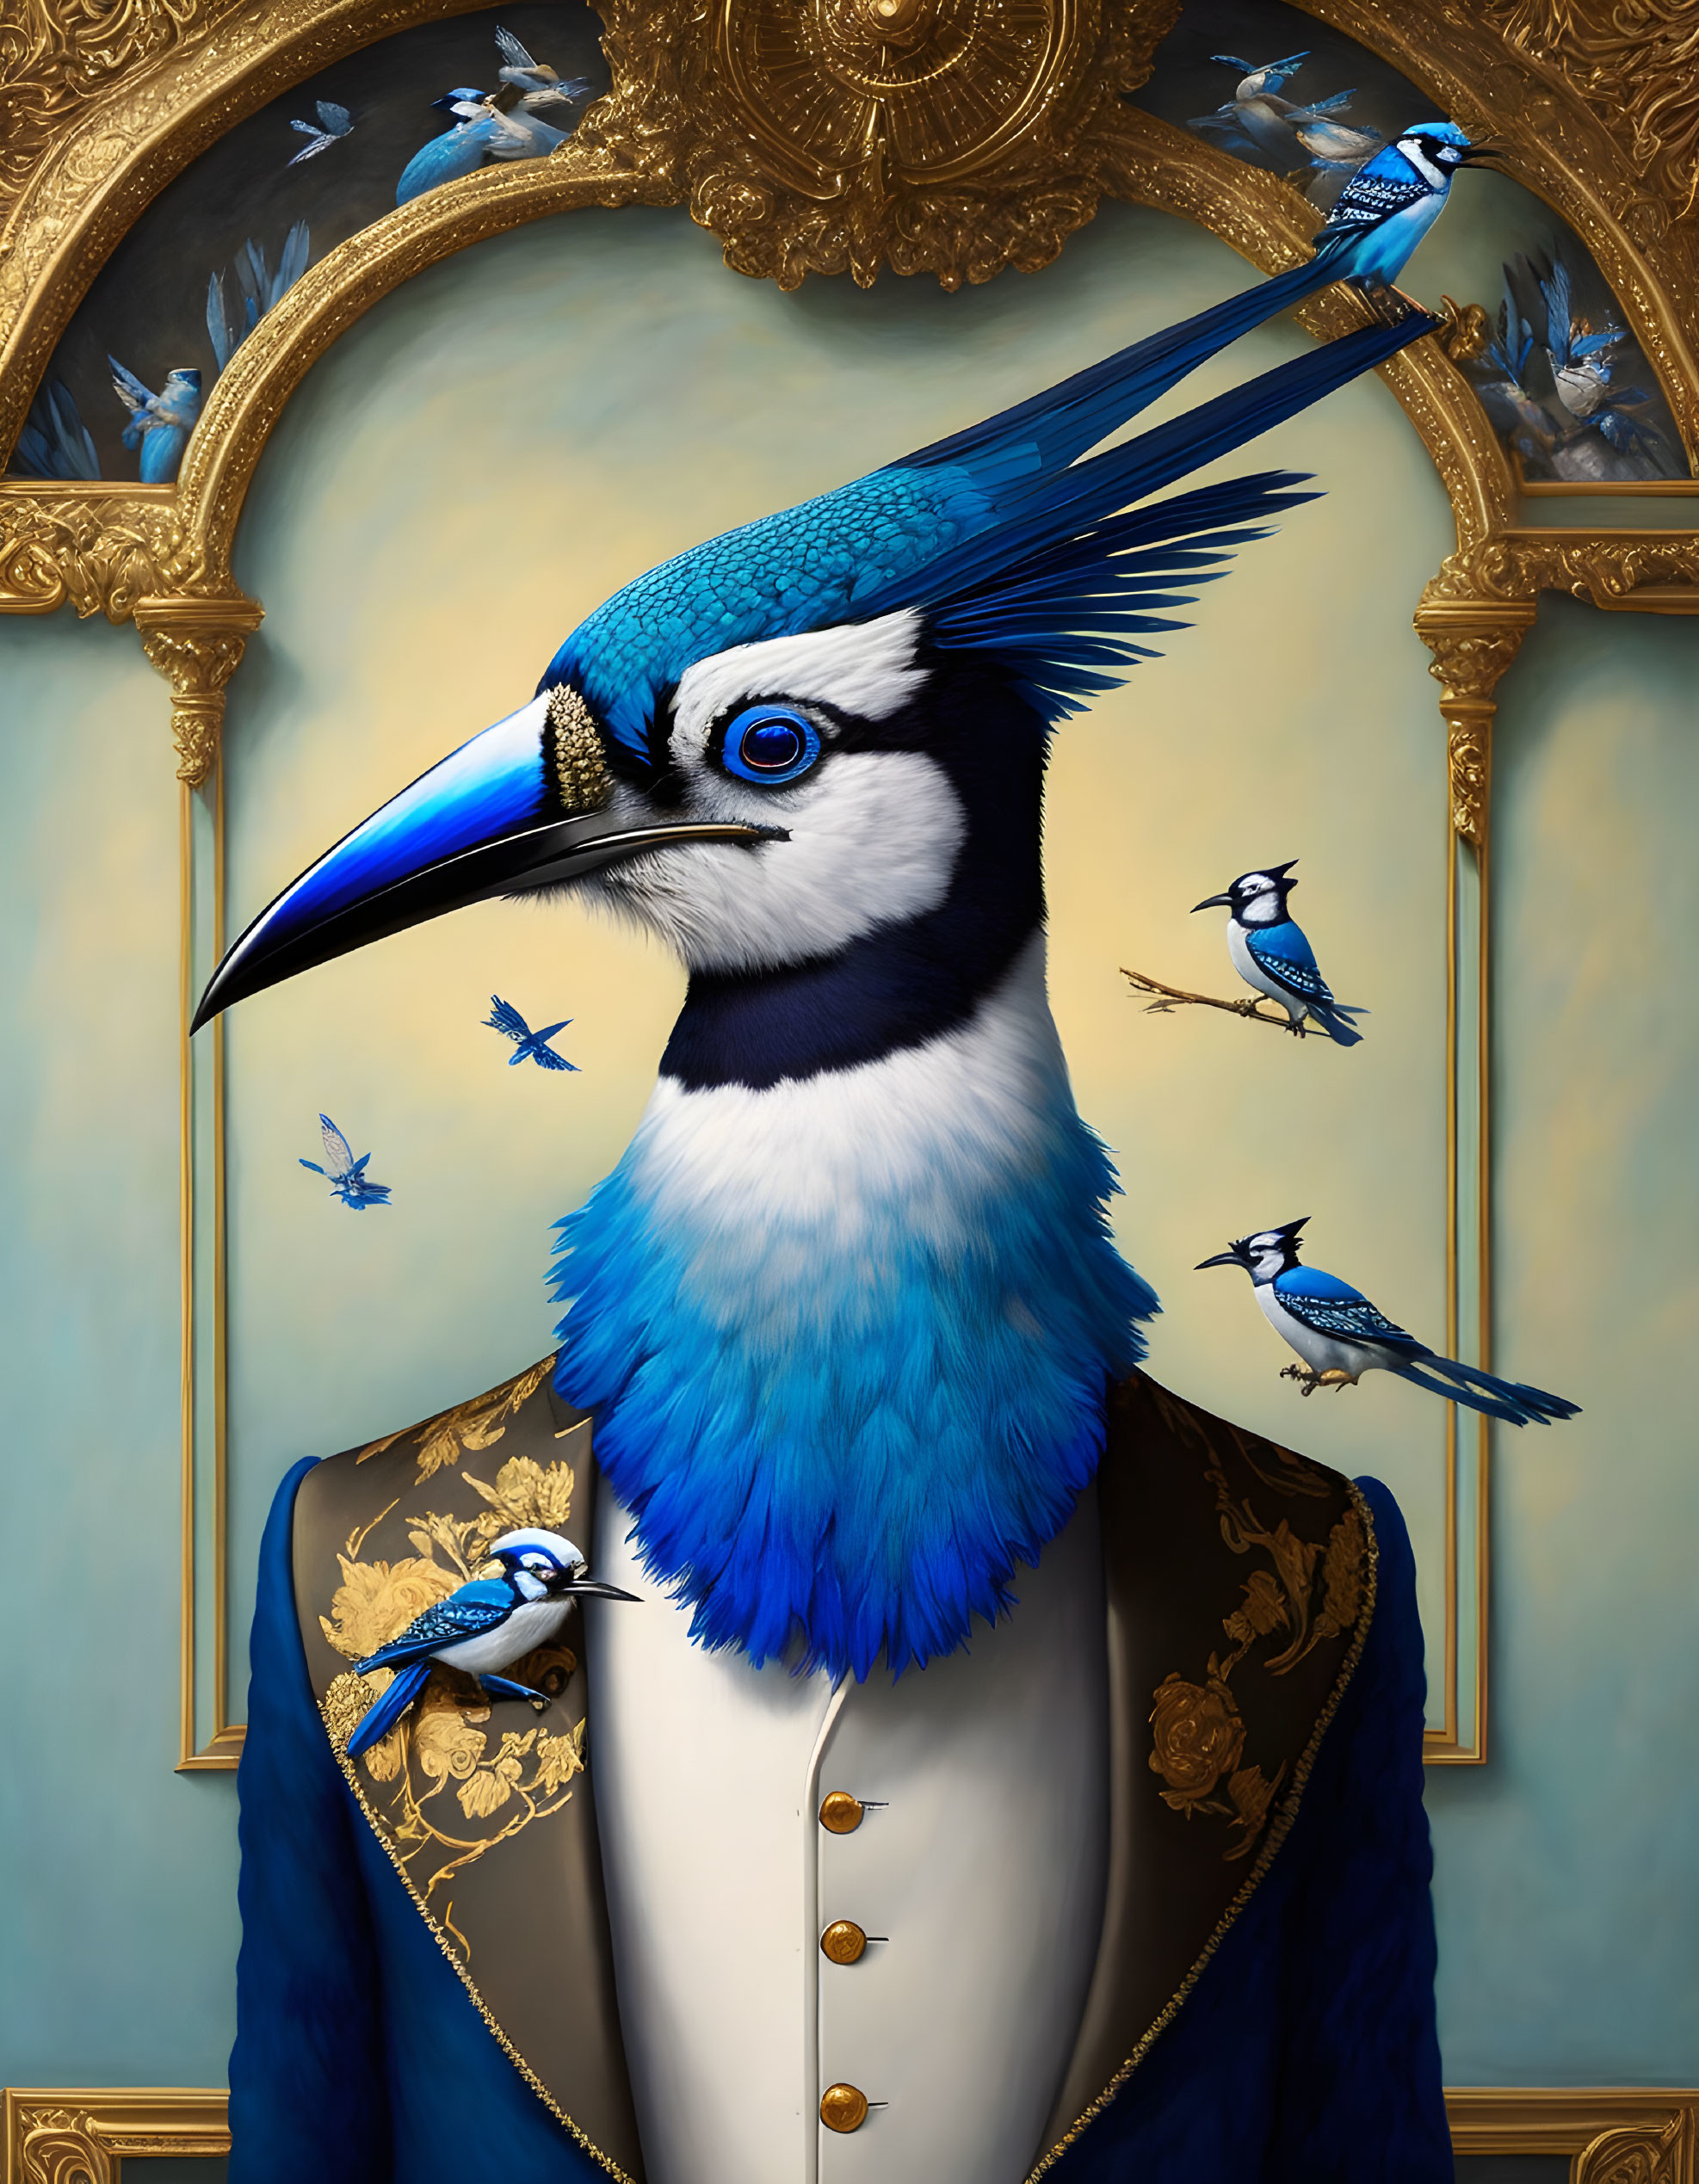 Mr. Blue Jay